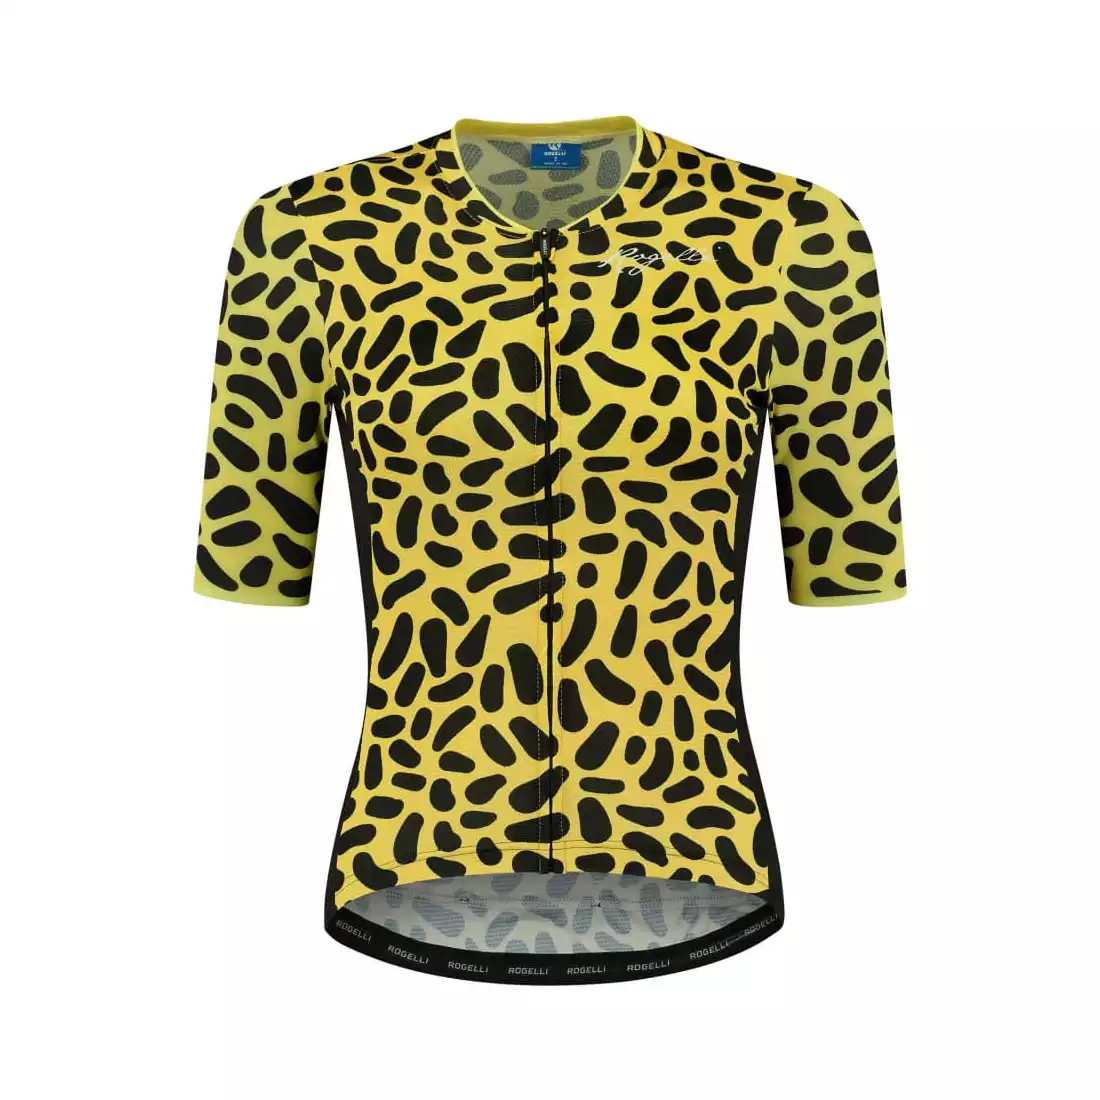 Rogelli ABSTRACT damska koszulka rowerowa, żółto-czarna 